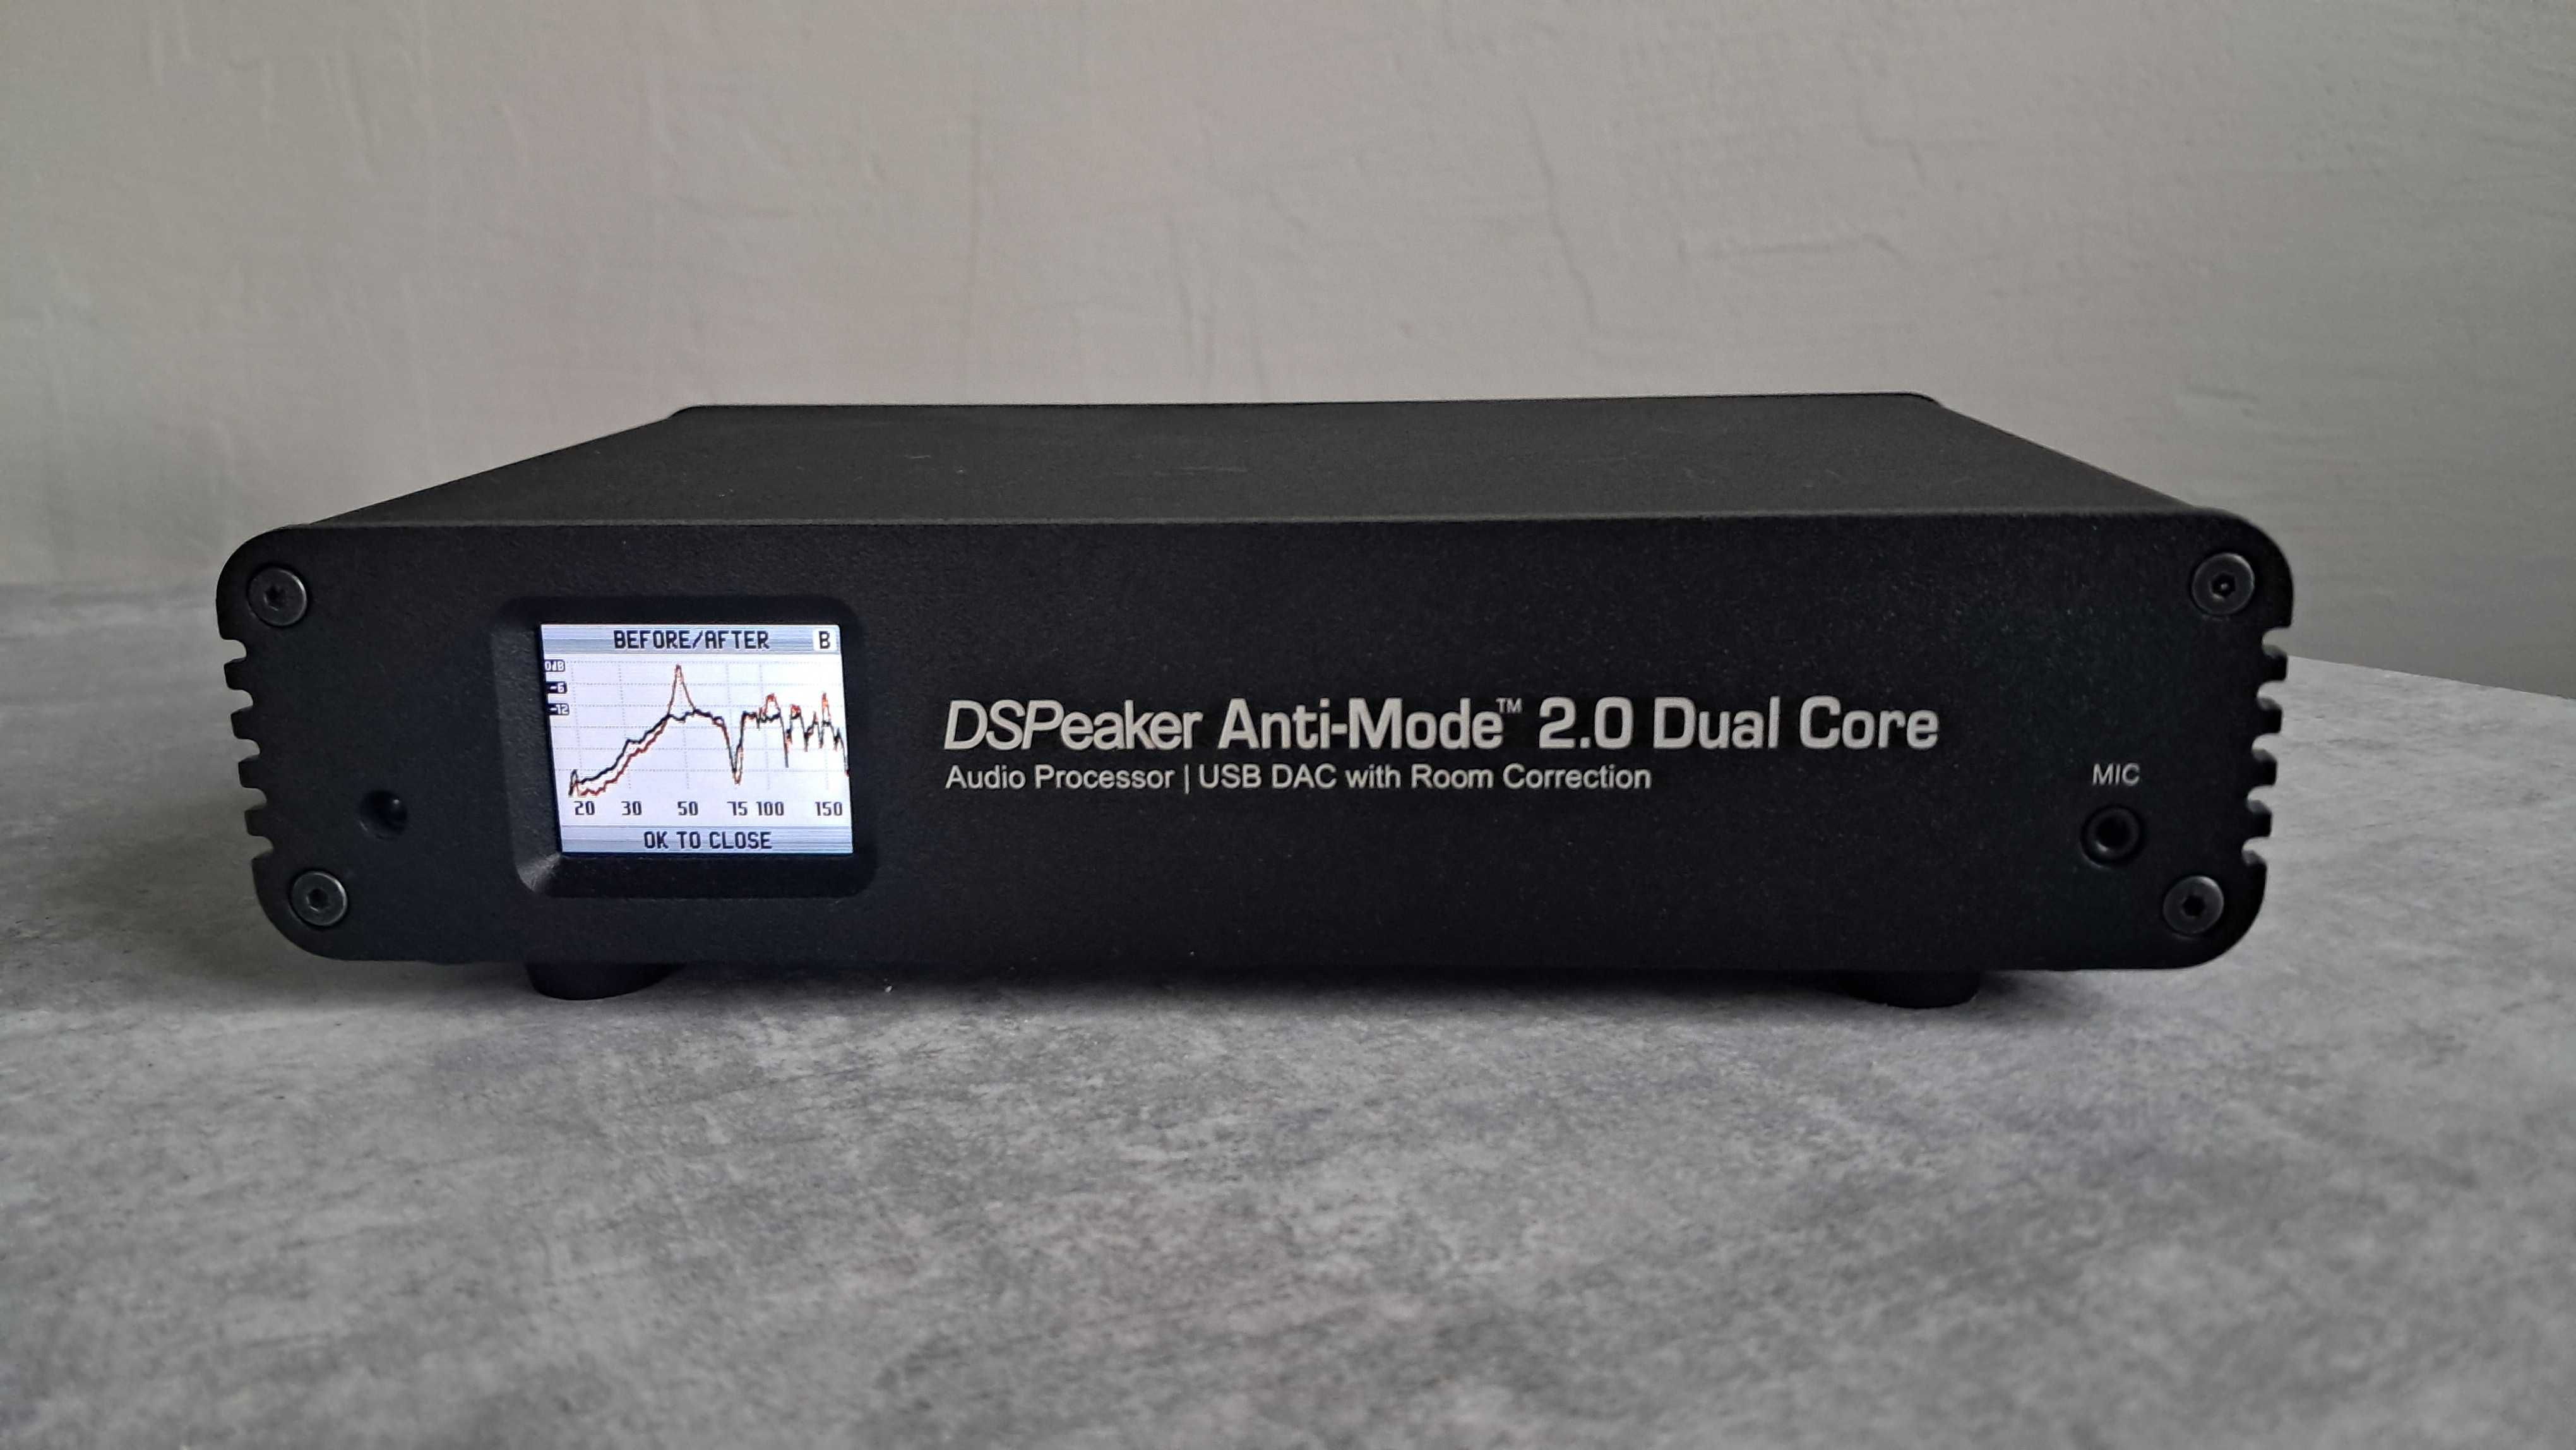 Dspeaker Anti-Mode 2.0 Dual Core DSP